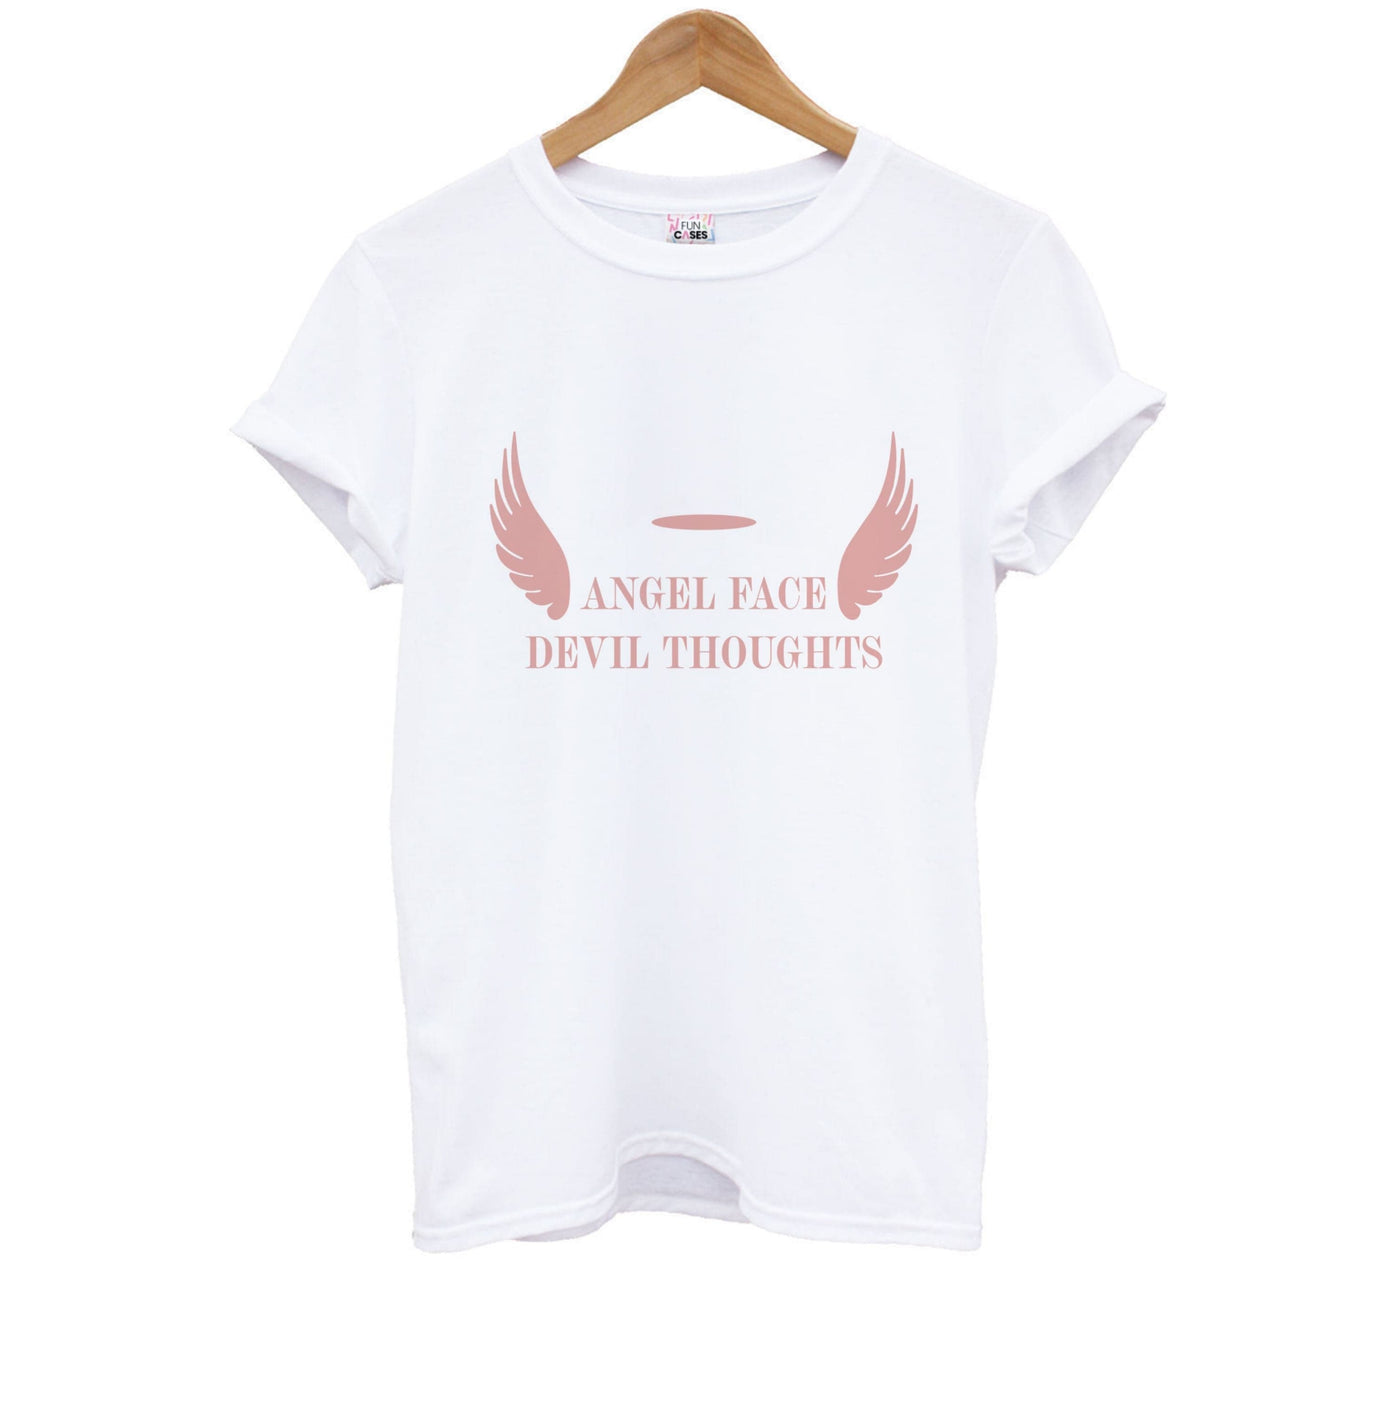 Angel Face Devil Thoughts Kids T-Shirt